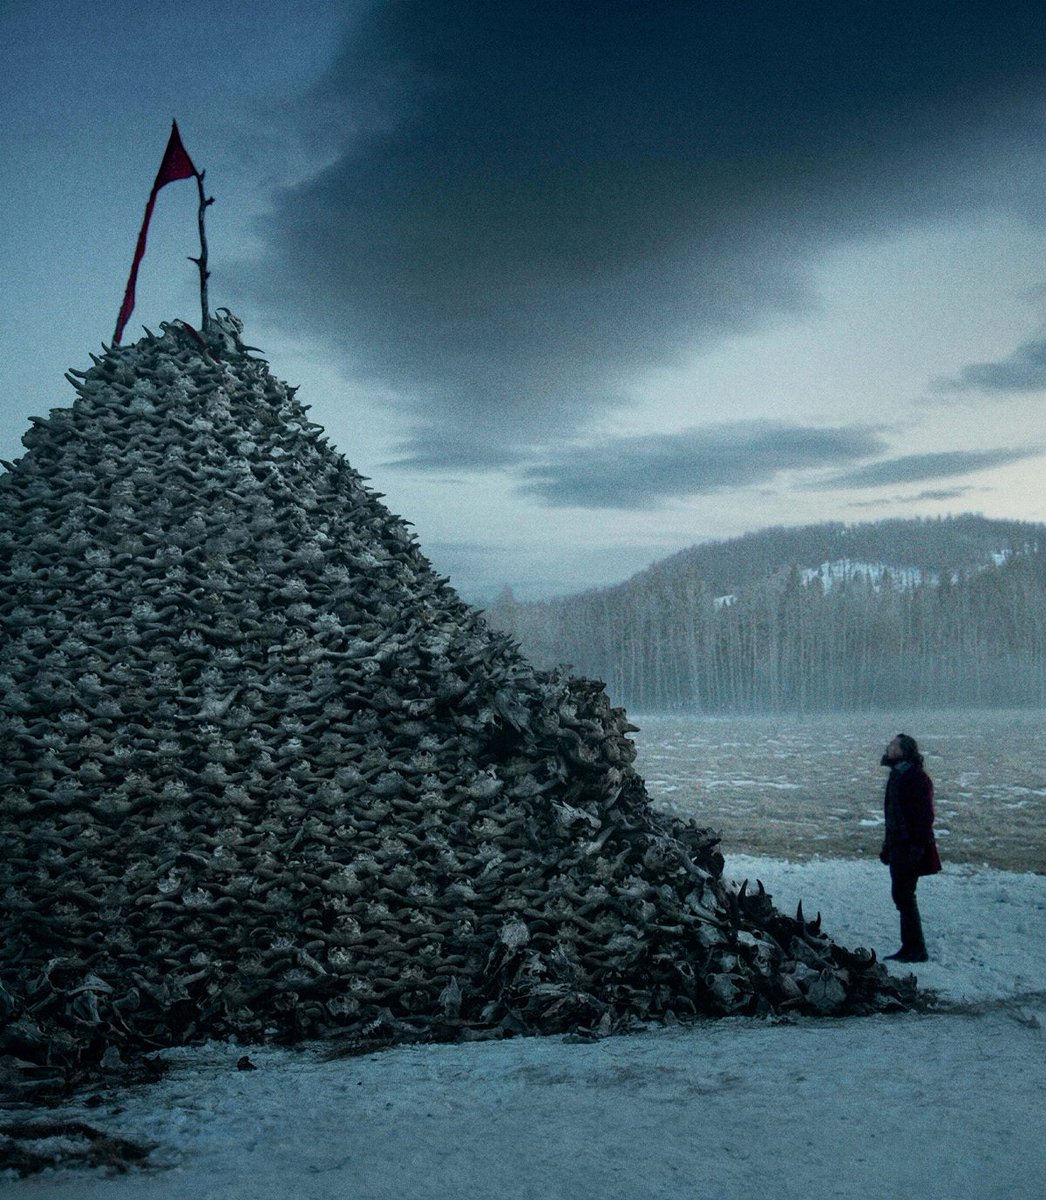 #therevenant 2015 dir:#alejandrogonzaleziñarritu #cinematography by #emmanuellubezki (👇+)